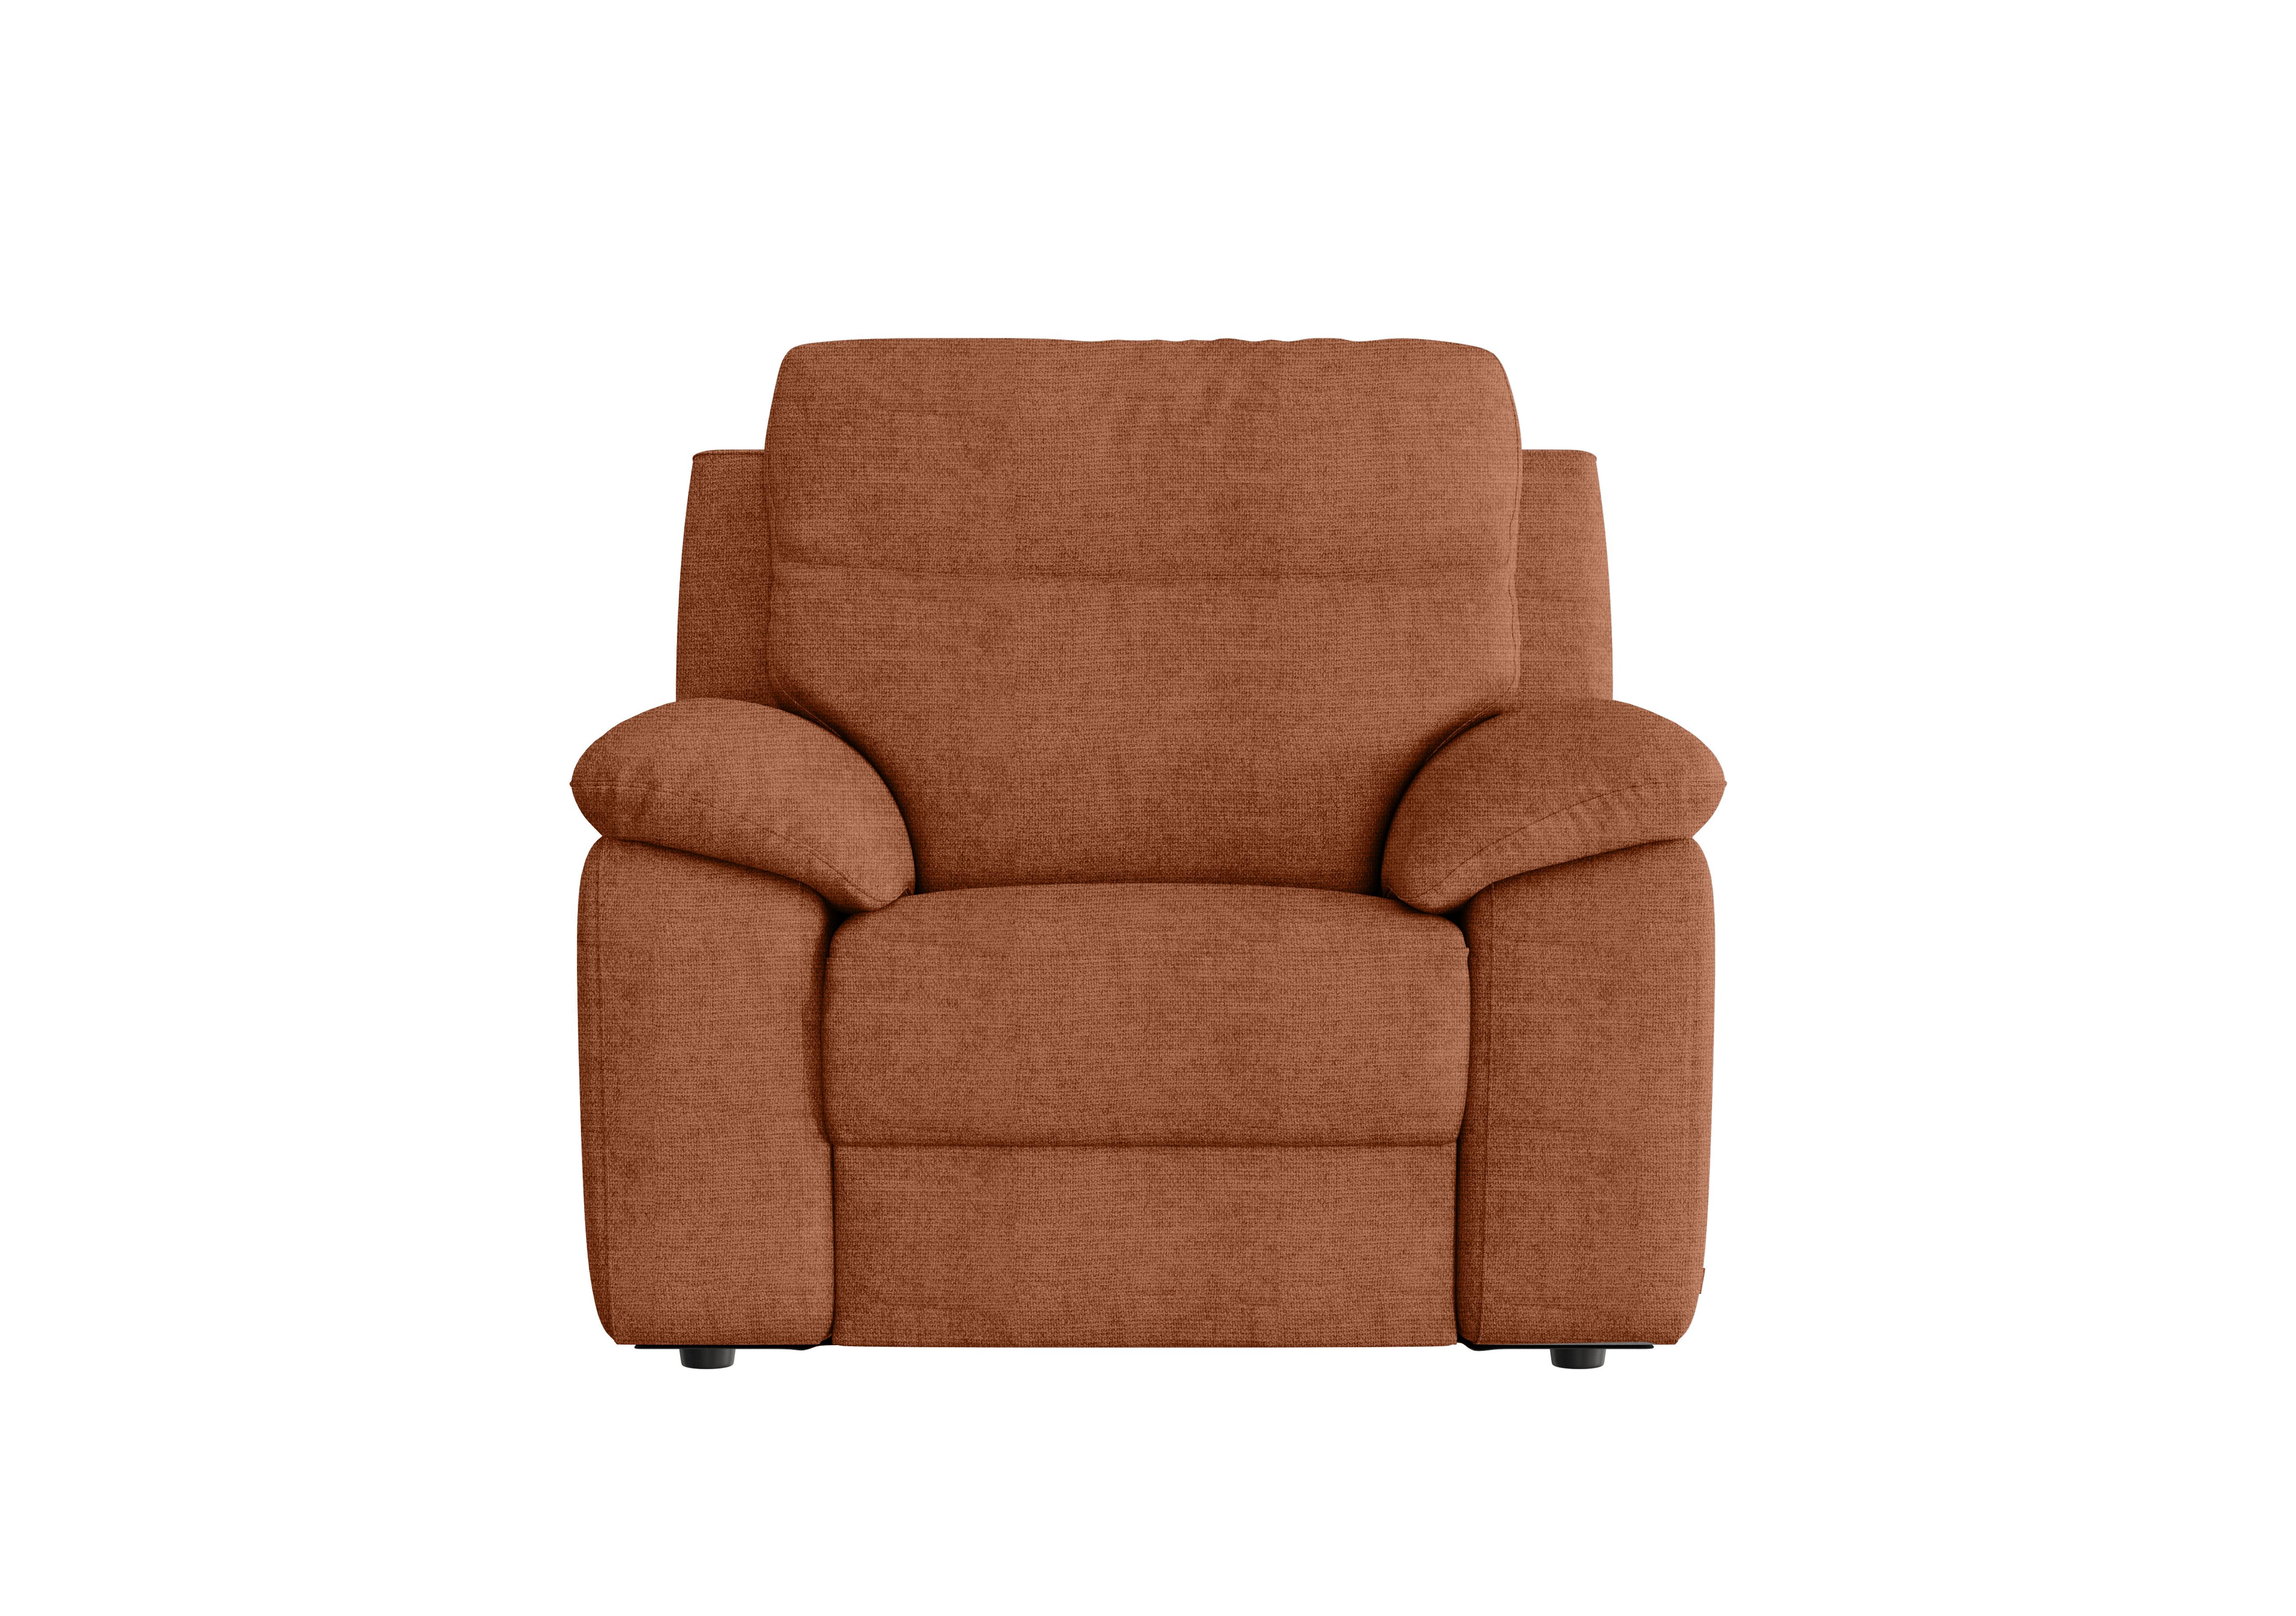 Pepino Fabric Chair in Baobab Ruggine 549 on Furniture Village